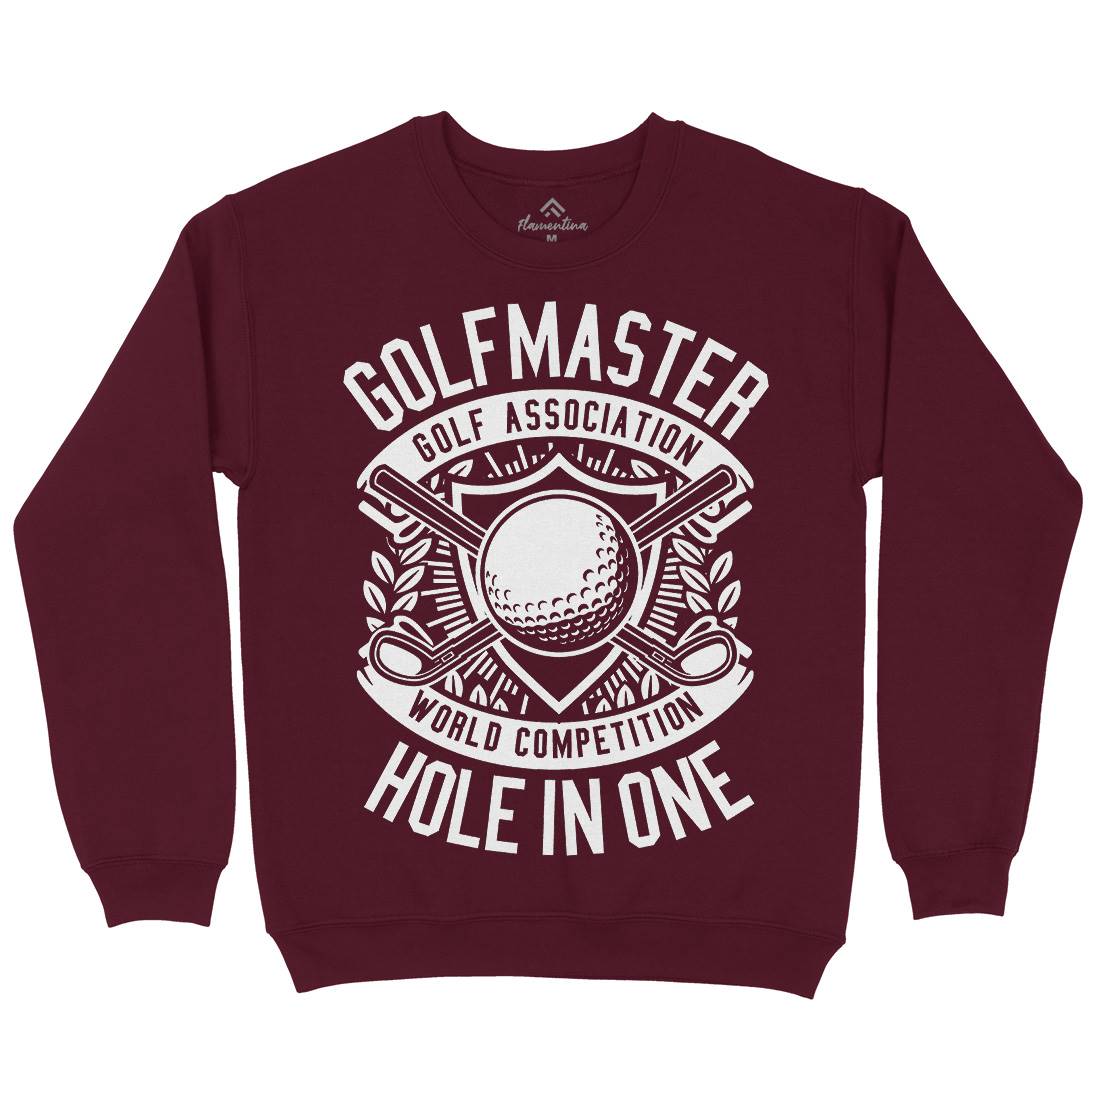 Golf Master Kids Crew Neck Sweatshirt Sport B547